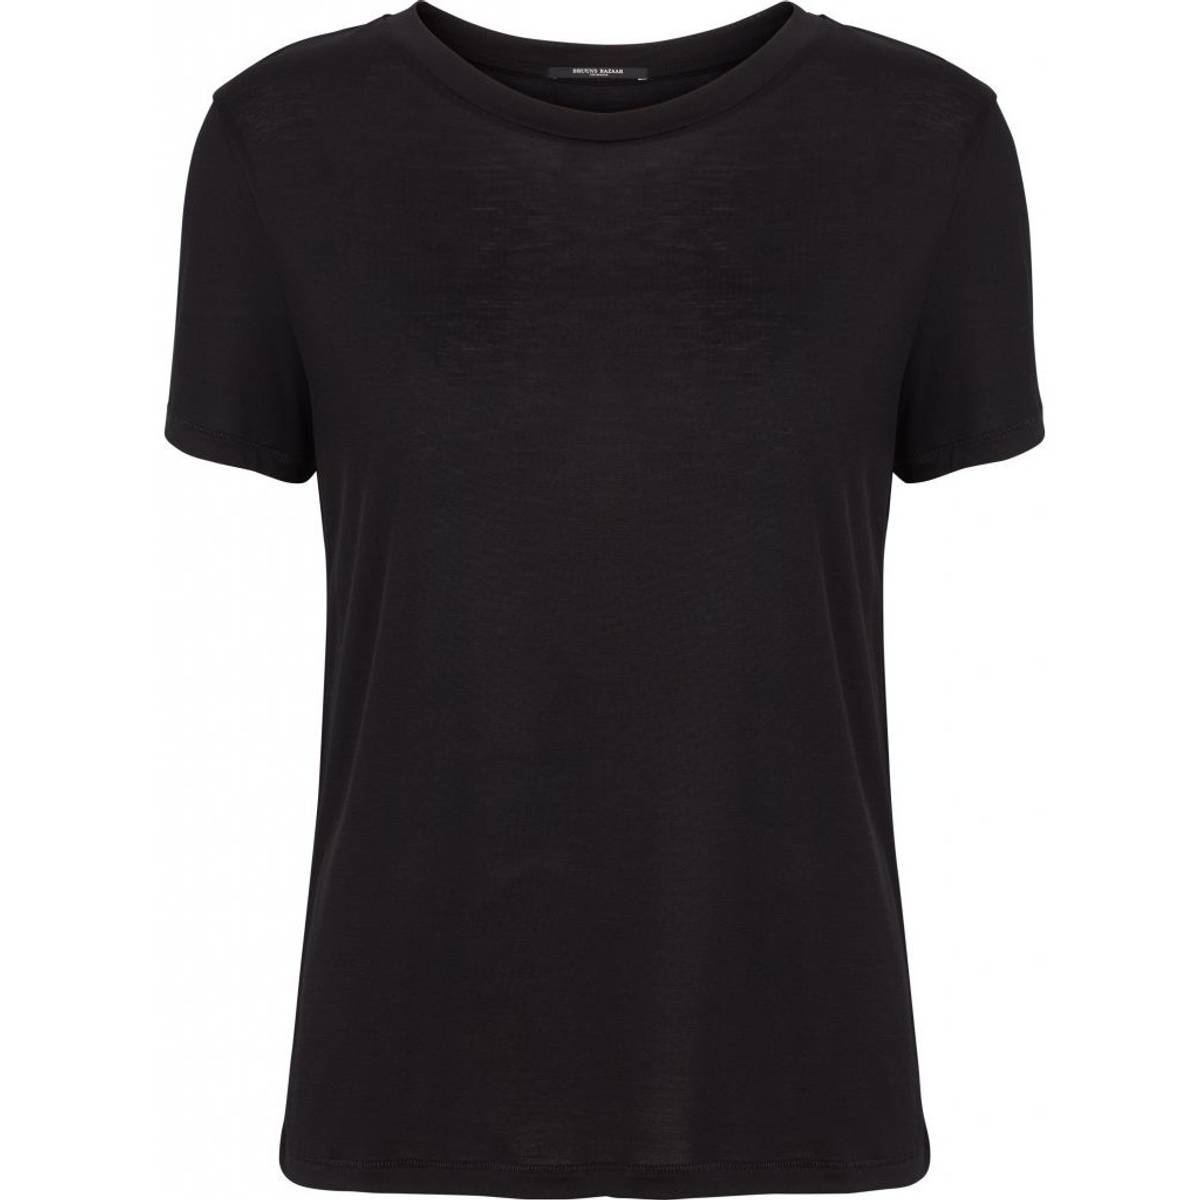 Katka SS T-Shirt by Bruuns Bazaar in Black